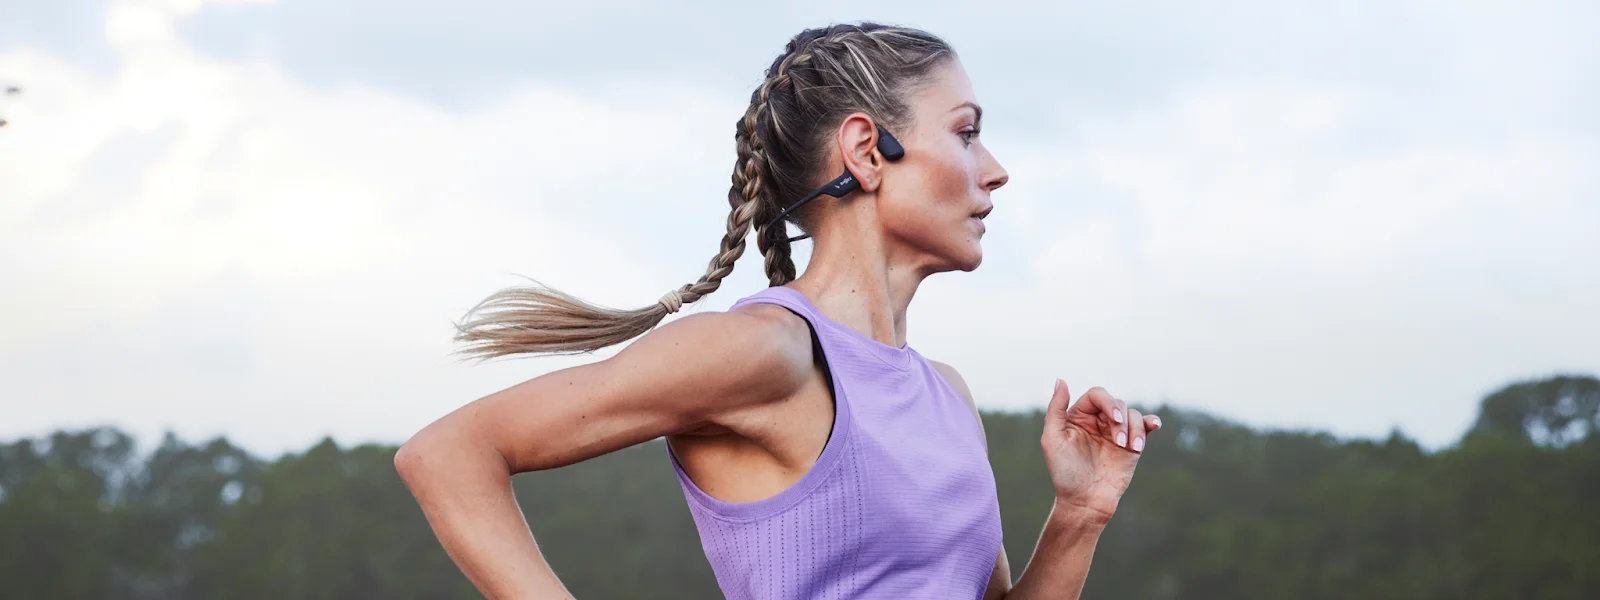 bluetooth running headphones for athletes shokz united kingdom